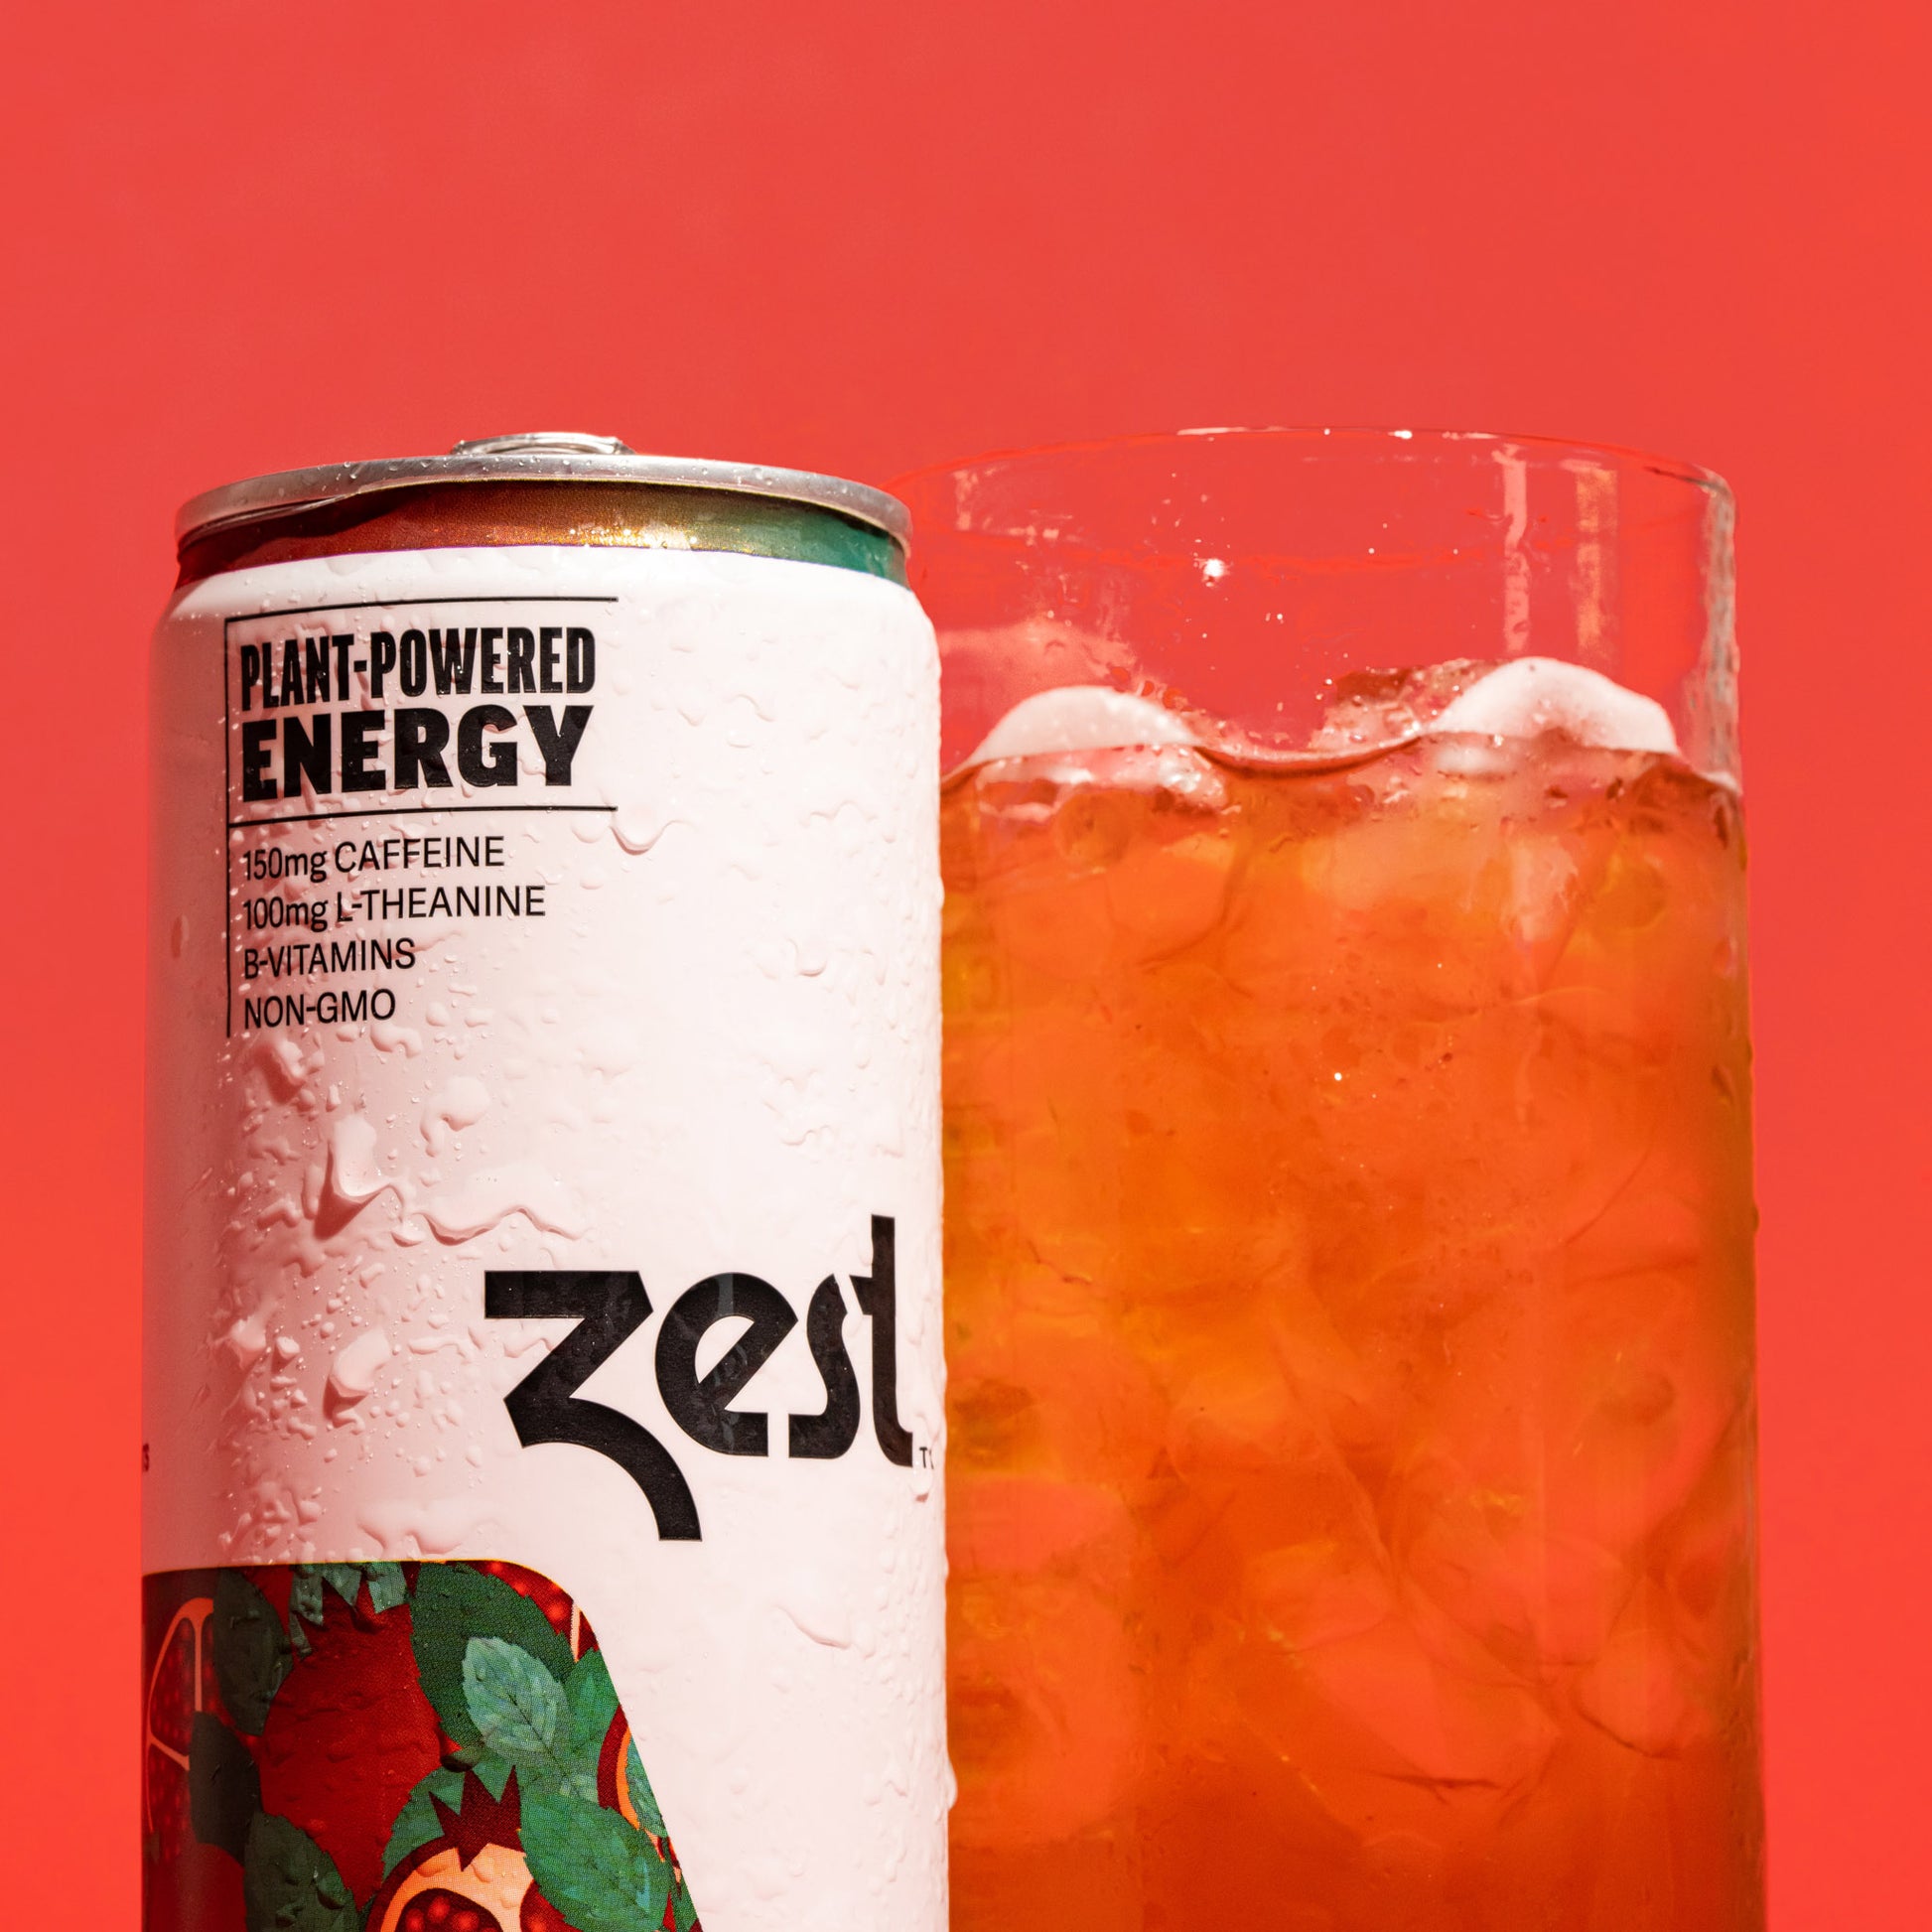 Zest Pomegranate Mint Plant-Powered Energy - High Caffeine Energy Drinks